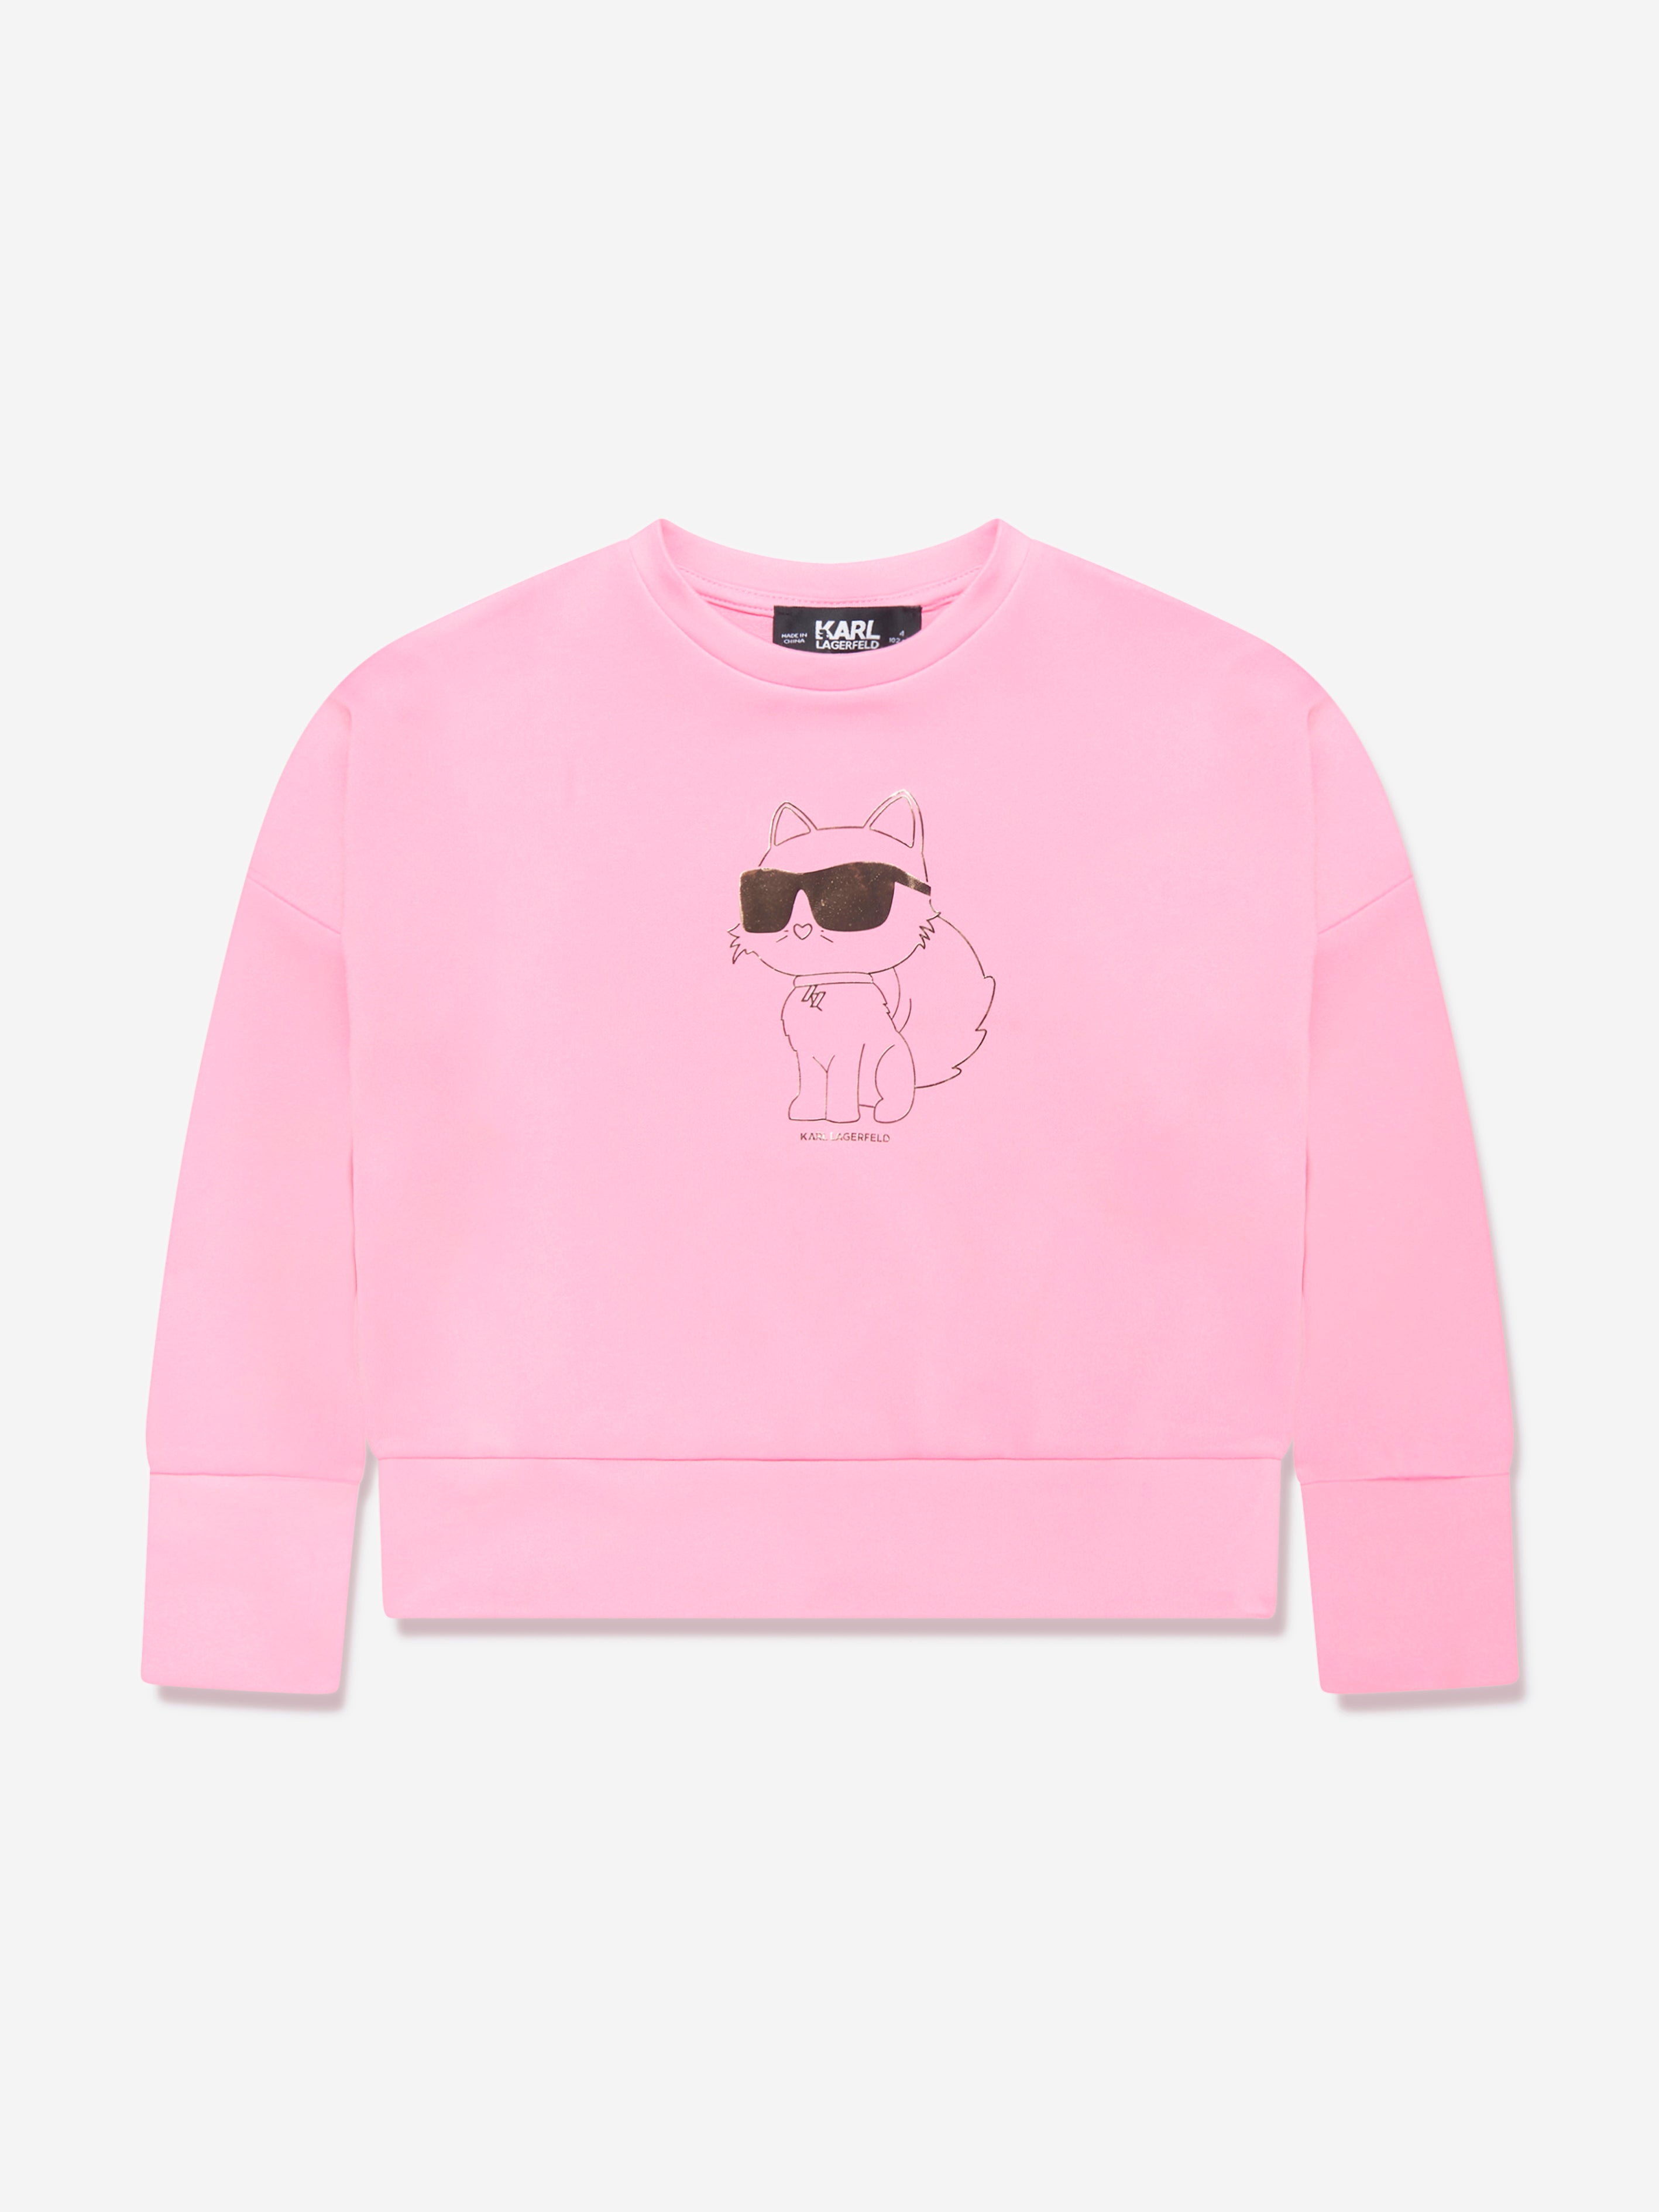 Girls Choupette Sweatshirt in Pink – Childsplay Clothing